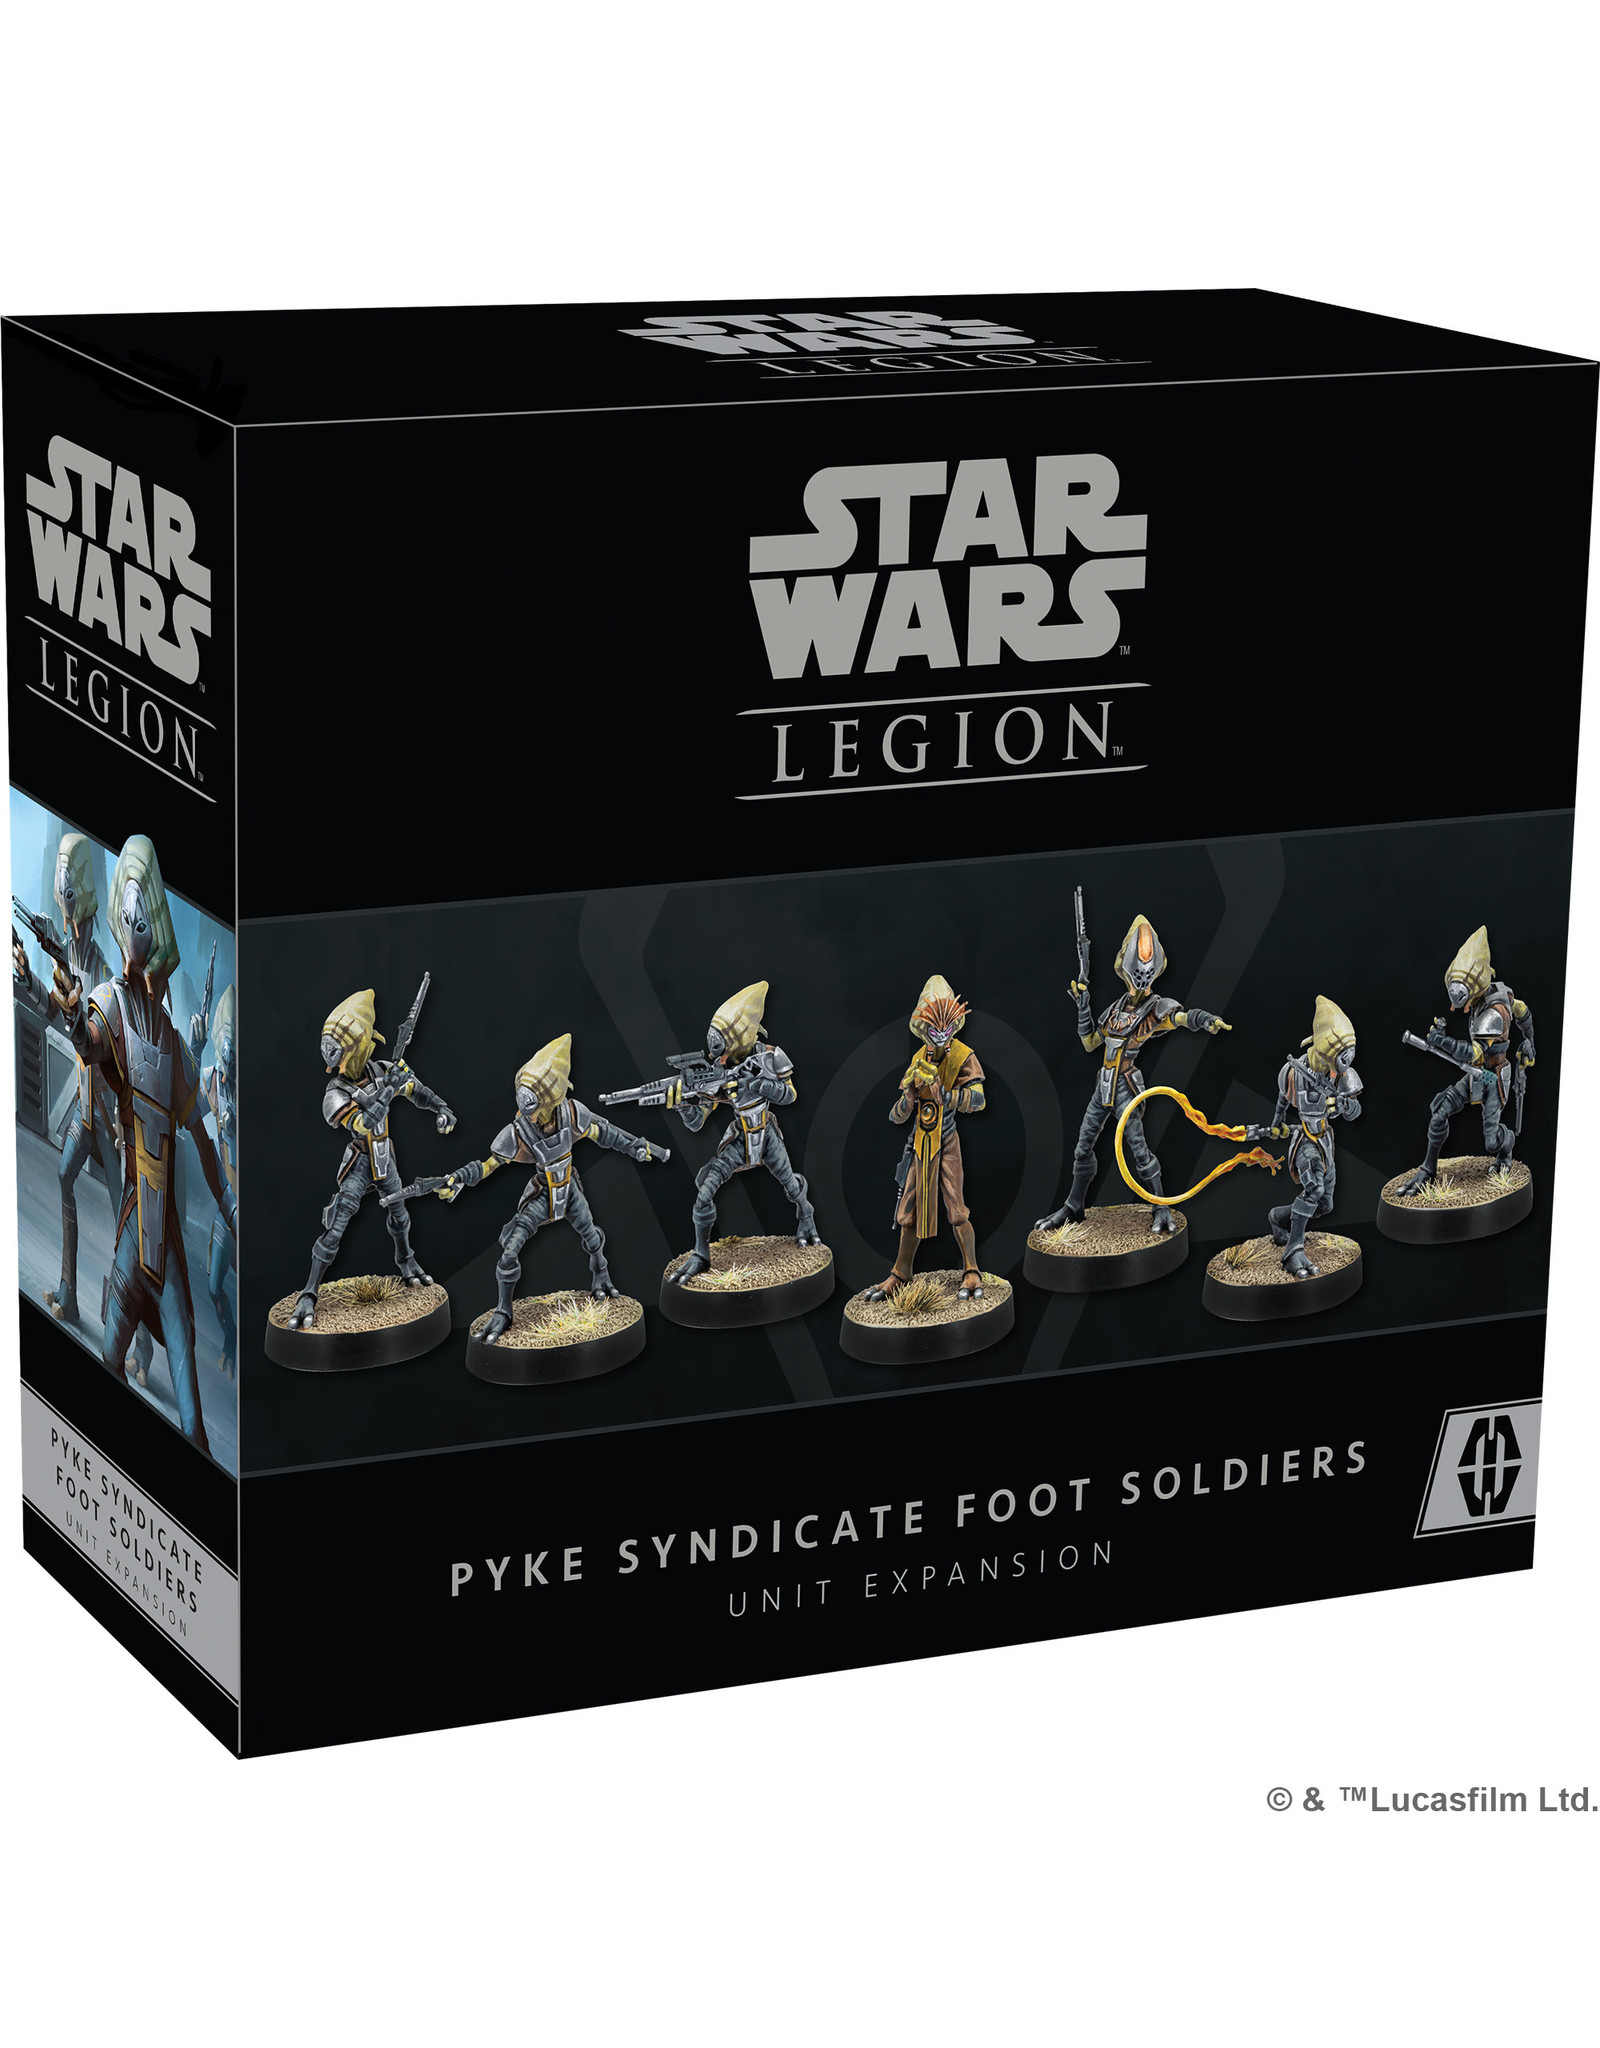 STAR WARS LEGION Star Wars Legion Pyke Syndicate Foot Soldiers Unit Expansion